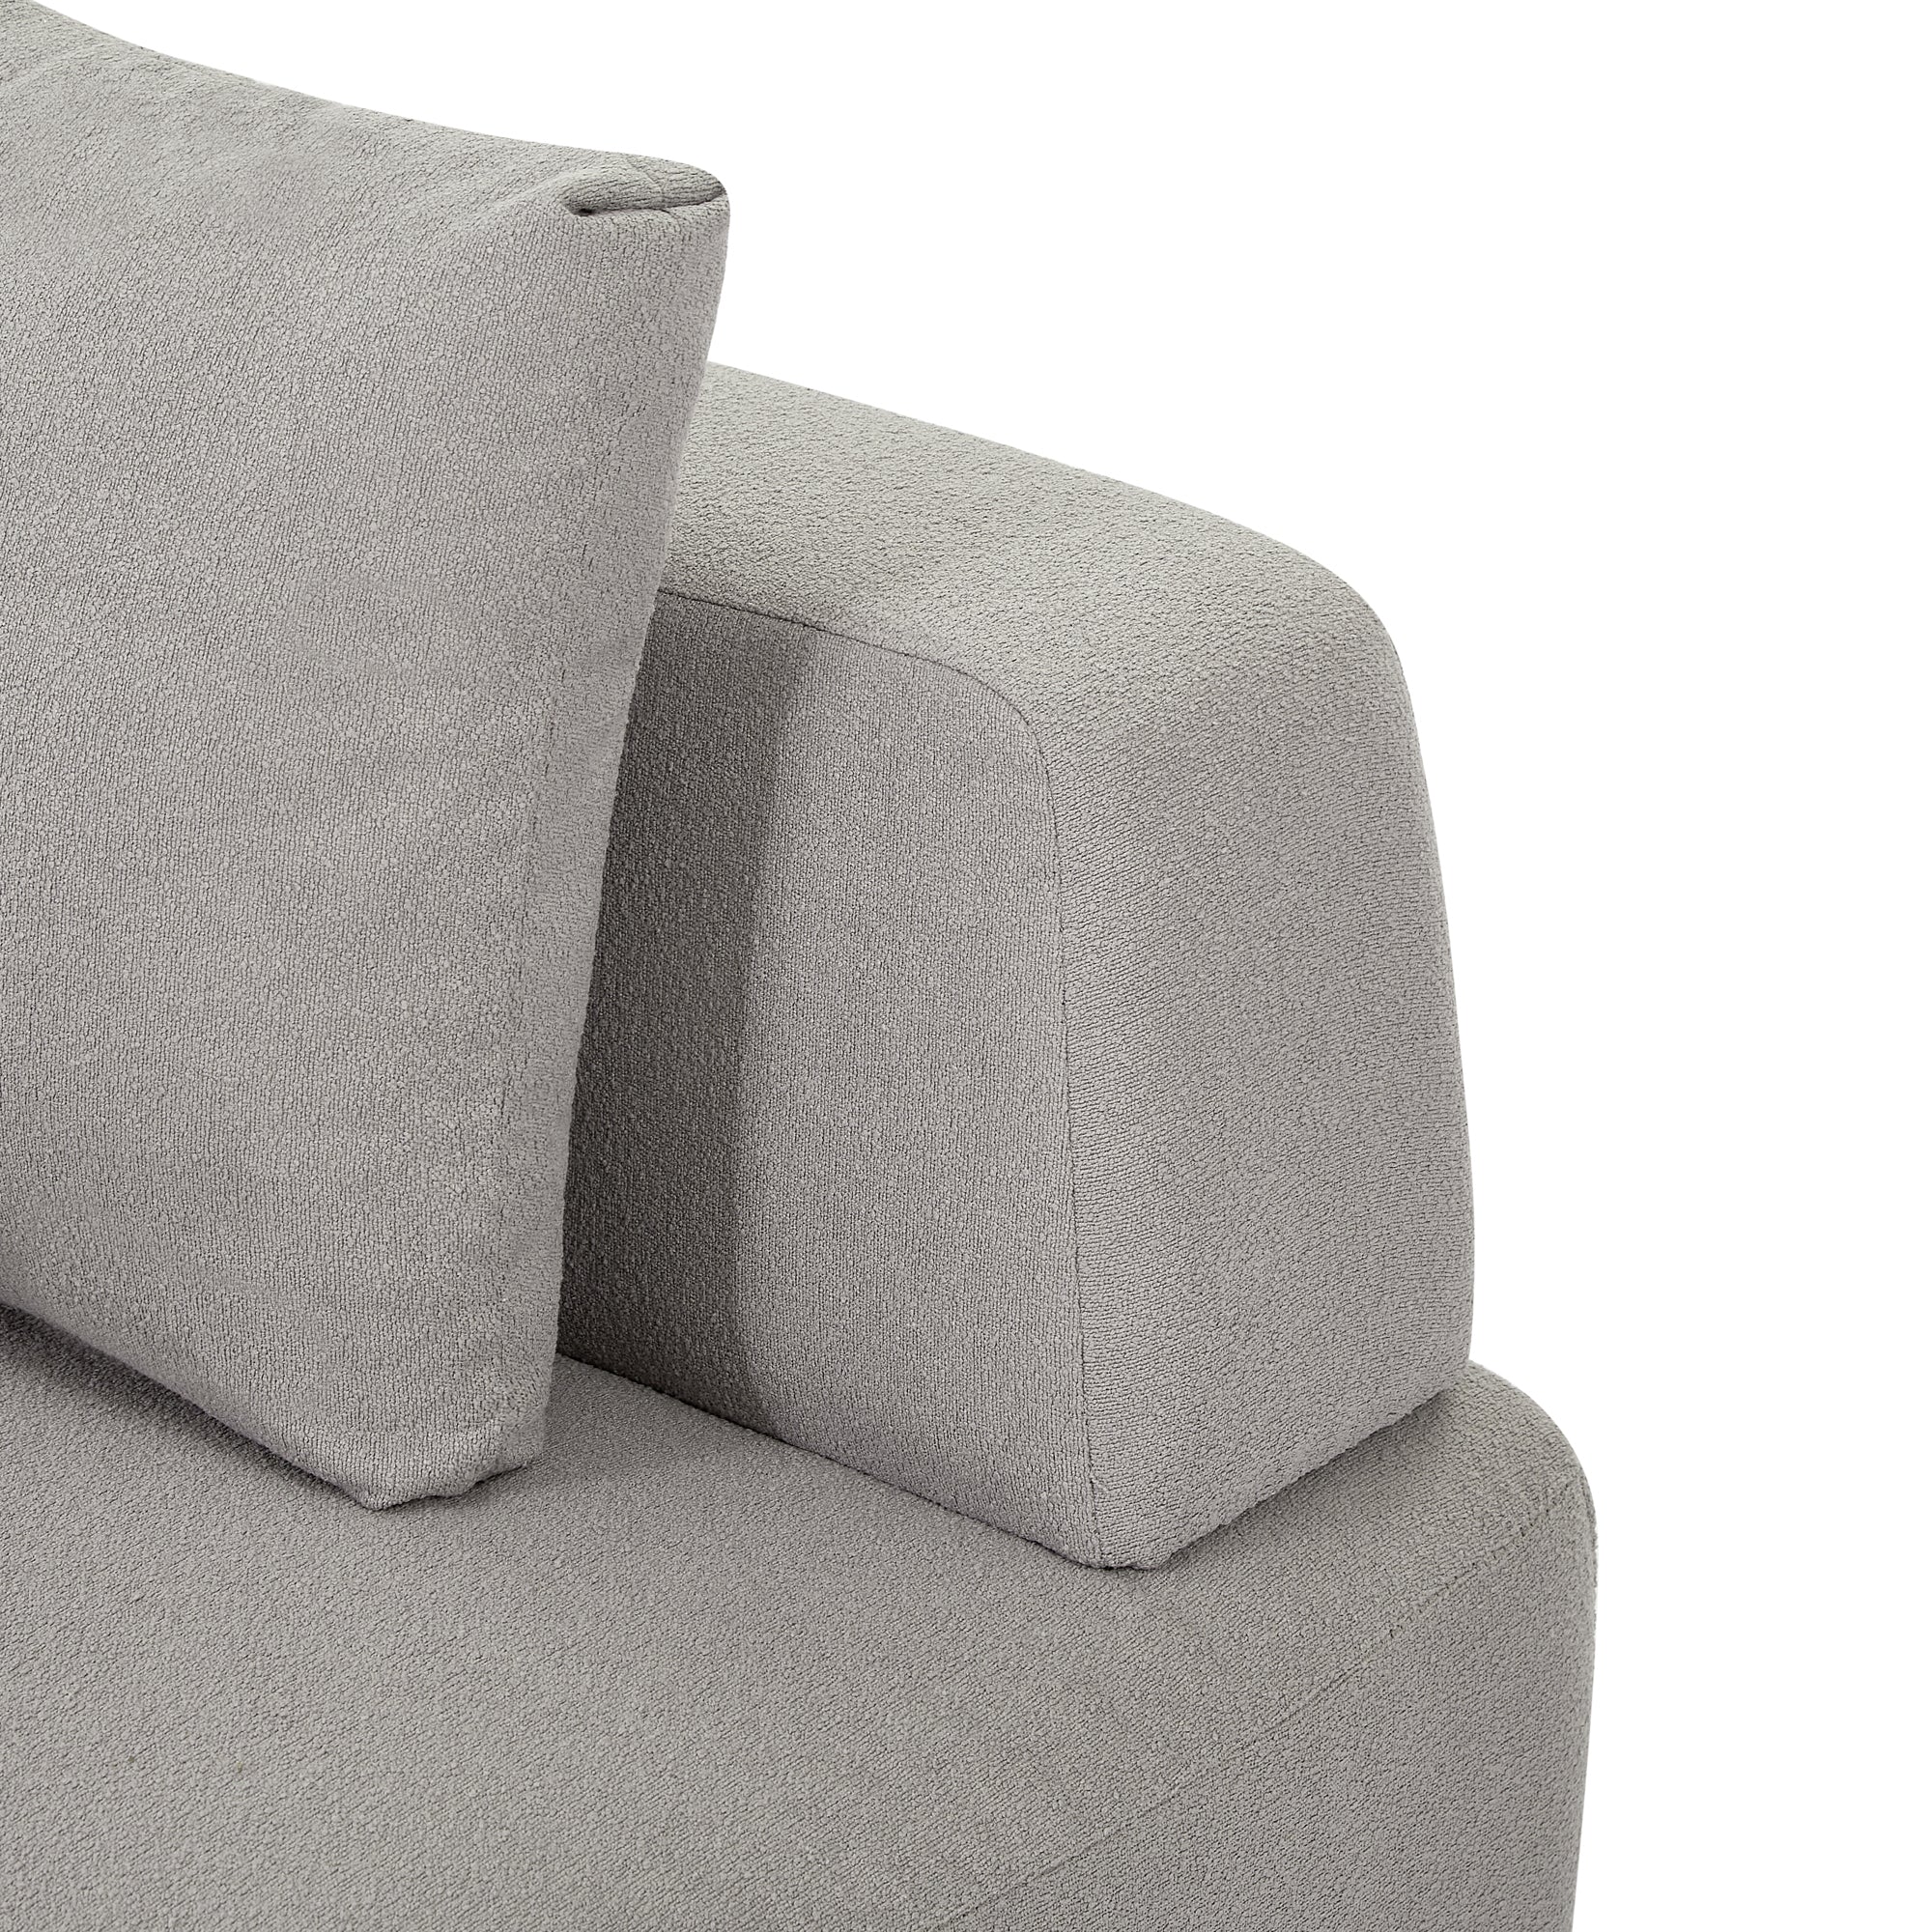 Contemporary 3-Piece Sectional Sofa with Free Convertible Ottoman & 4 Pillows - Grey